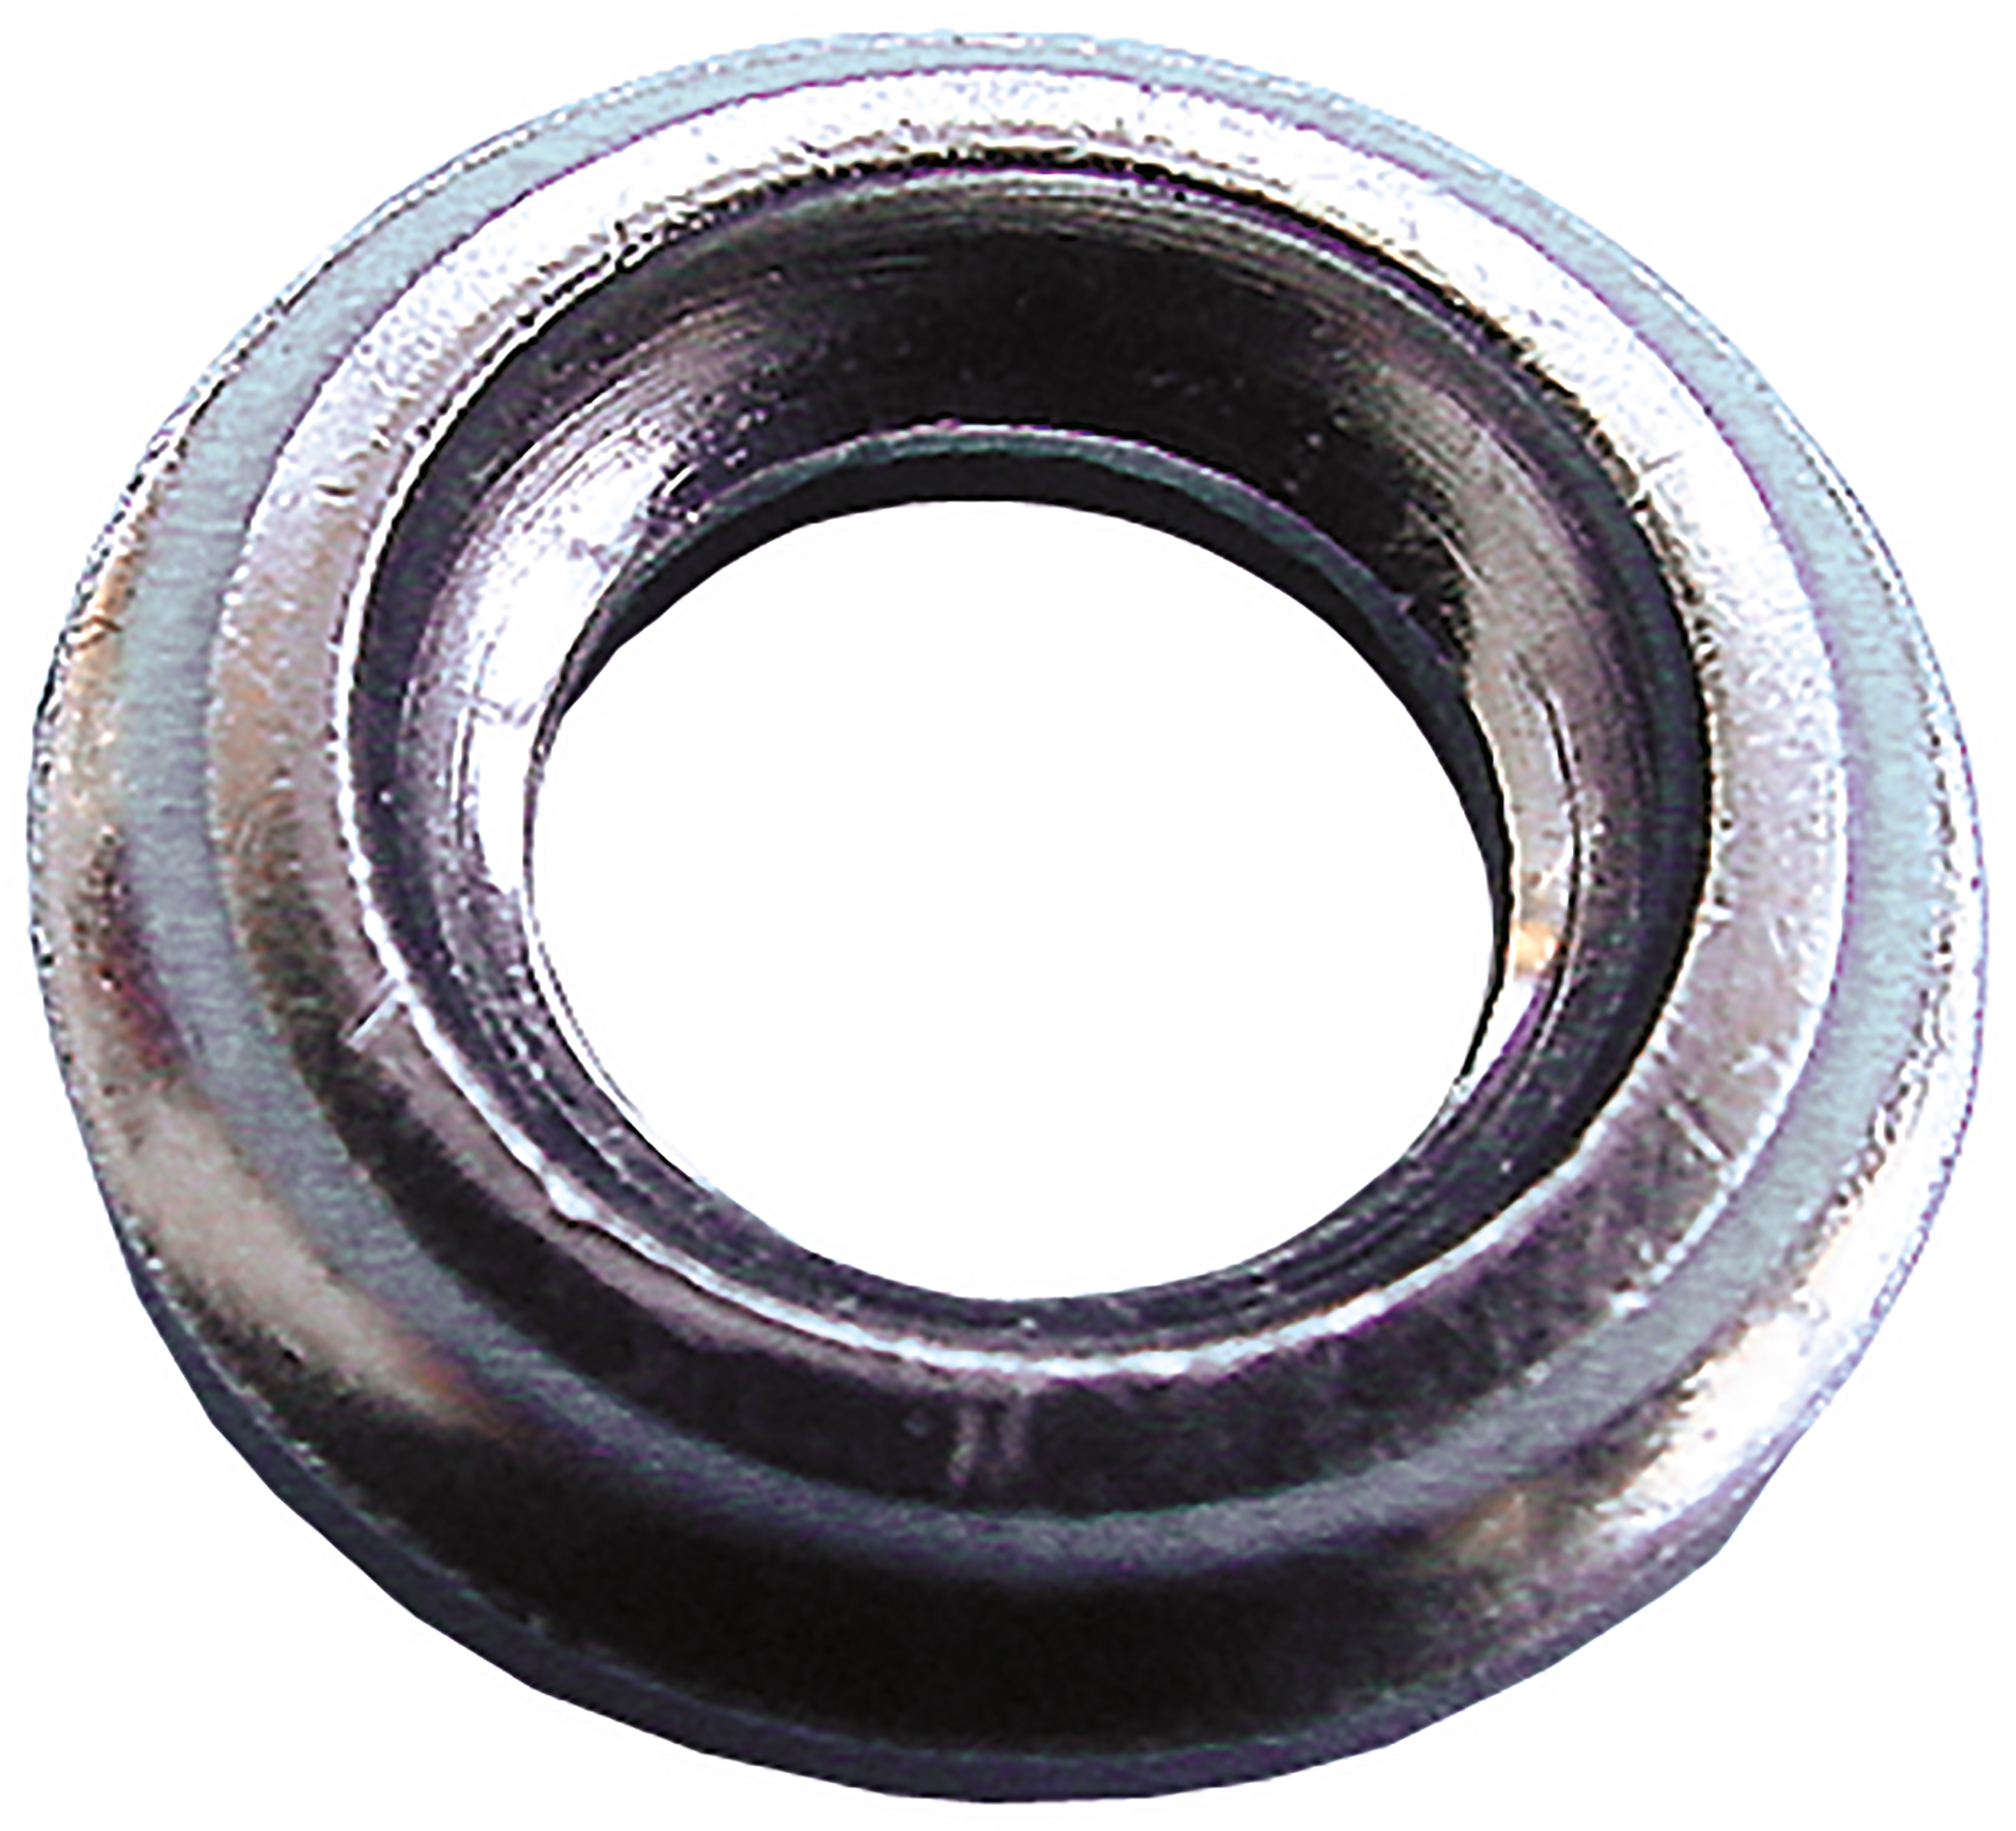 Sealing ring, G¼, aluminum